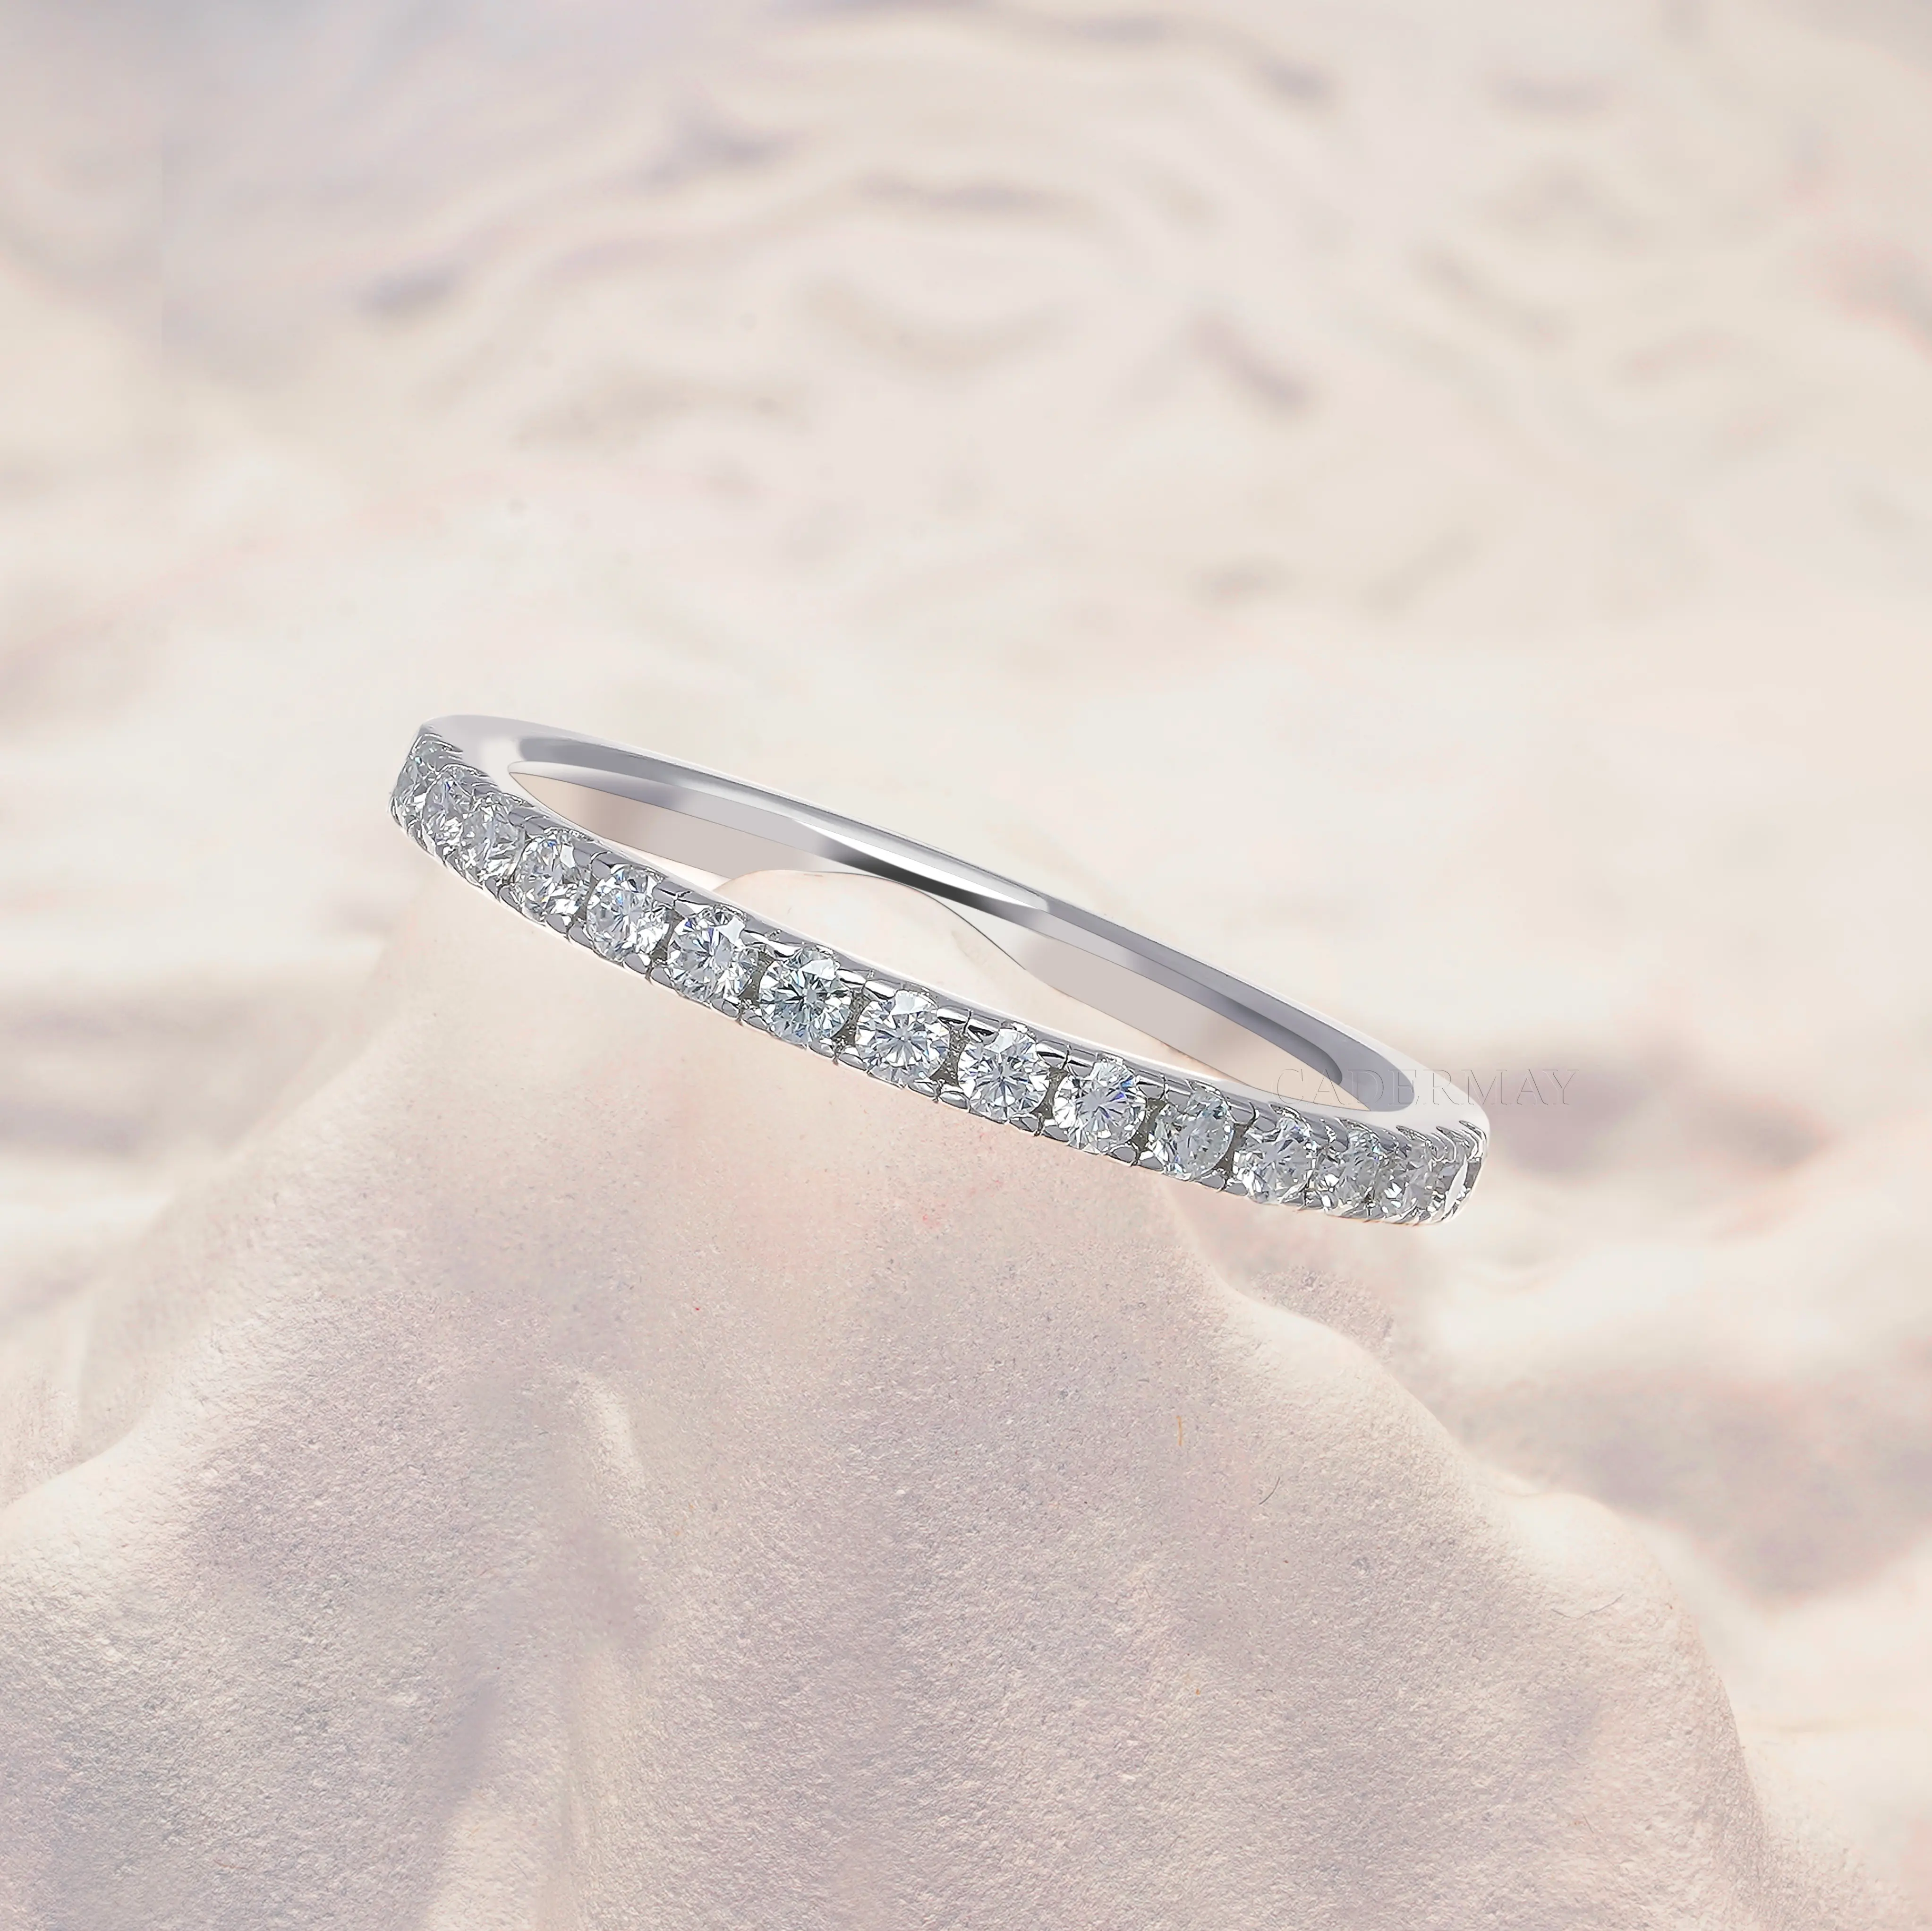 Cadermay D สี Moissanite เพชร 1.8 มม.925 แหวนเงินสเตอร์ลิงแหวนนิ้วสวมใส่ทุกวันครึ่งแหวนเพชรนิรันดร์